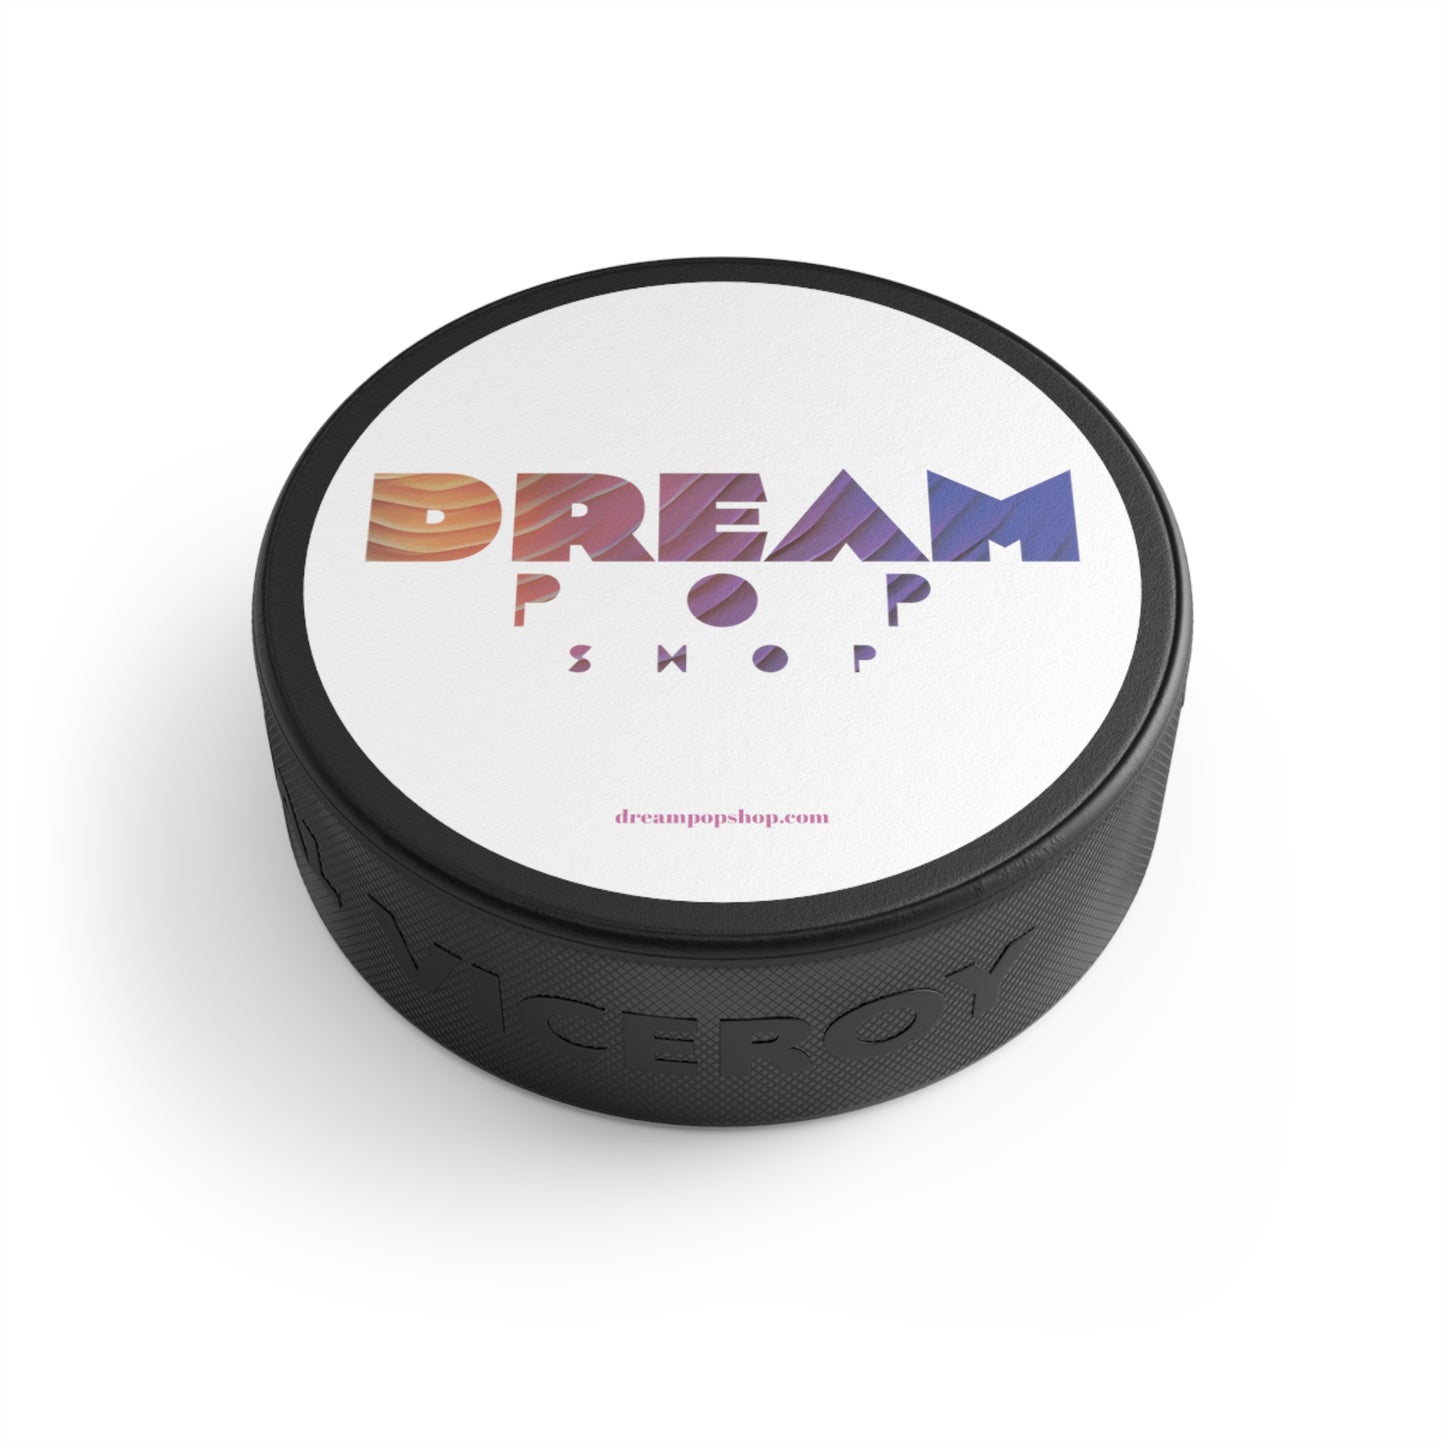 Dream Pop Shop Hockey Puck